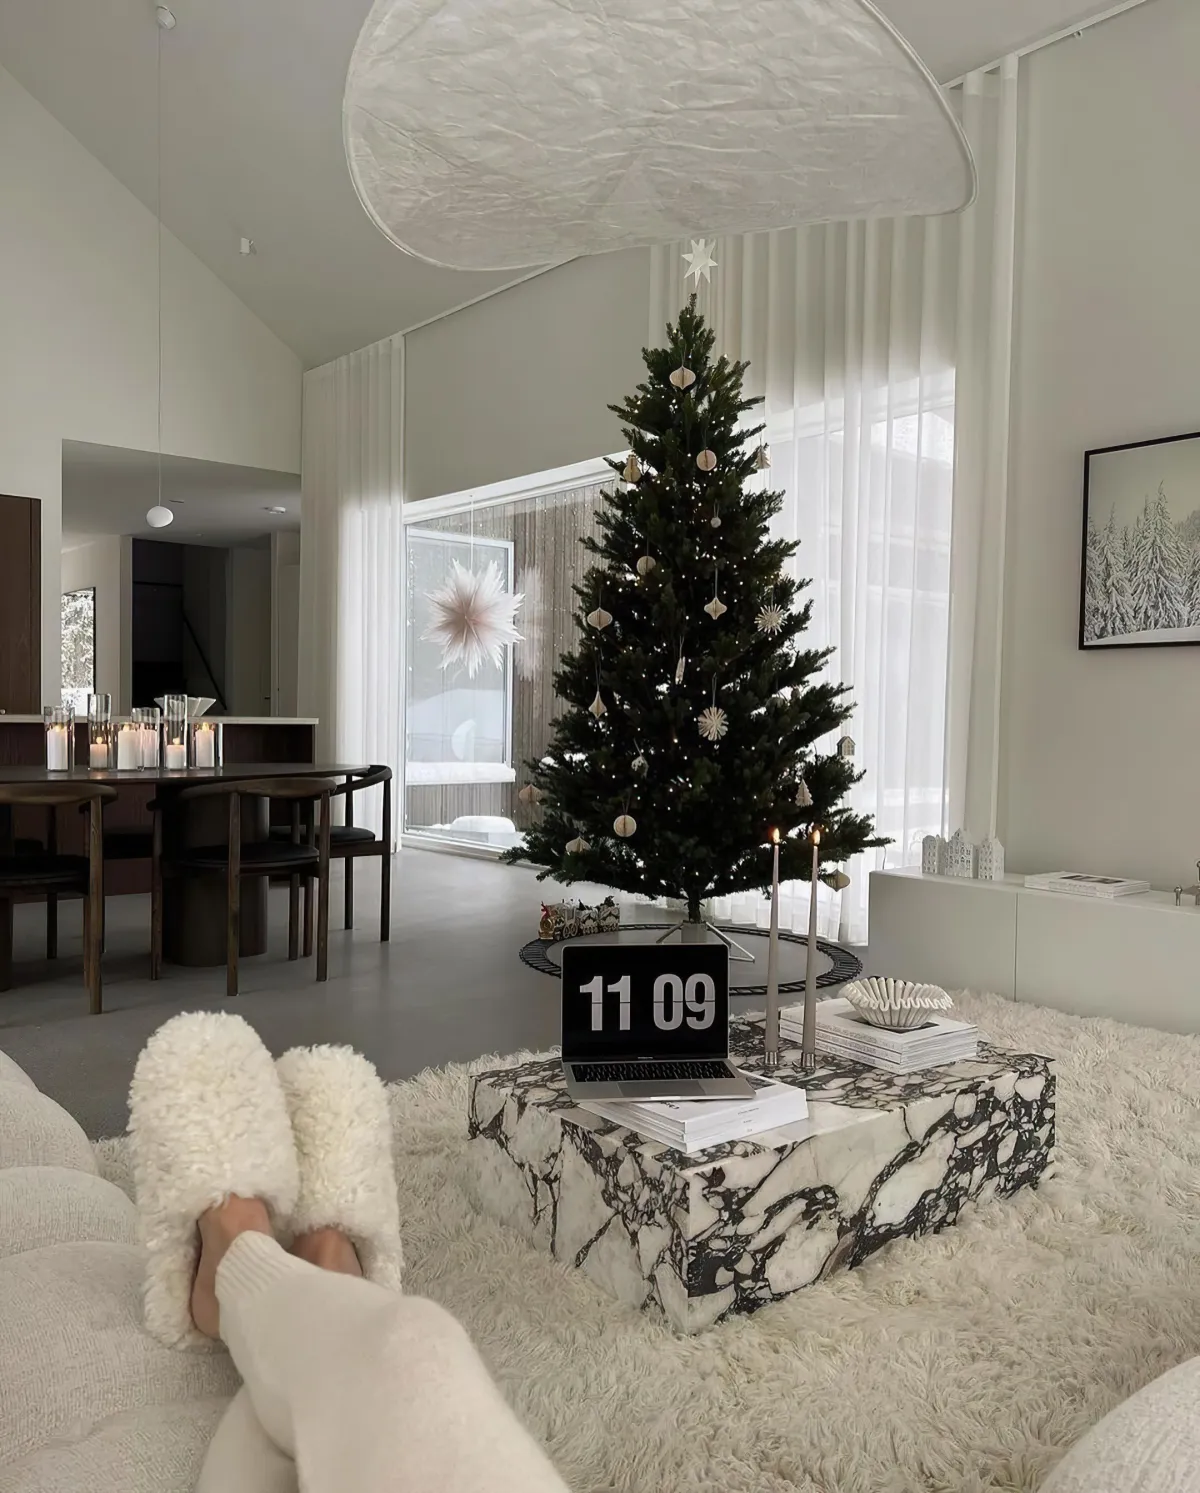 arbre noel minimaliste salon blanc canape d angle fond d ecran neutre